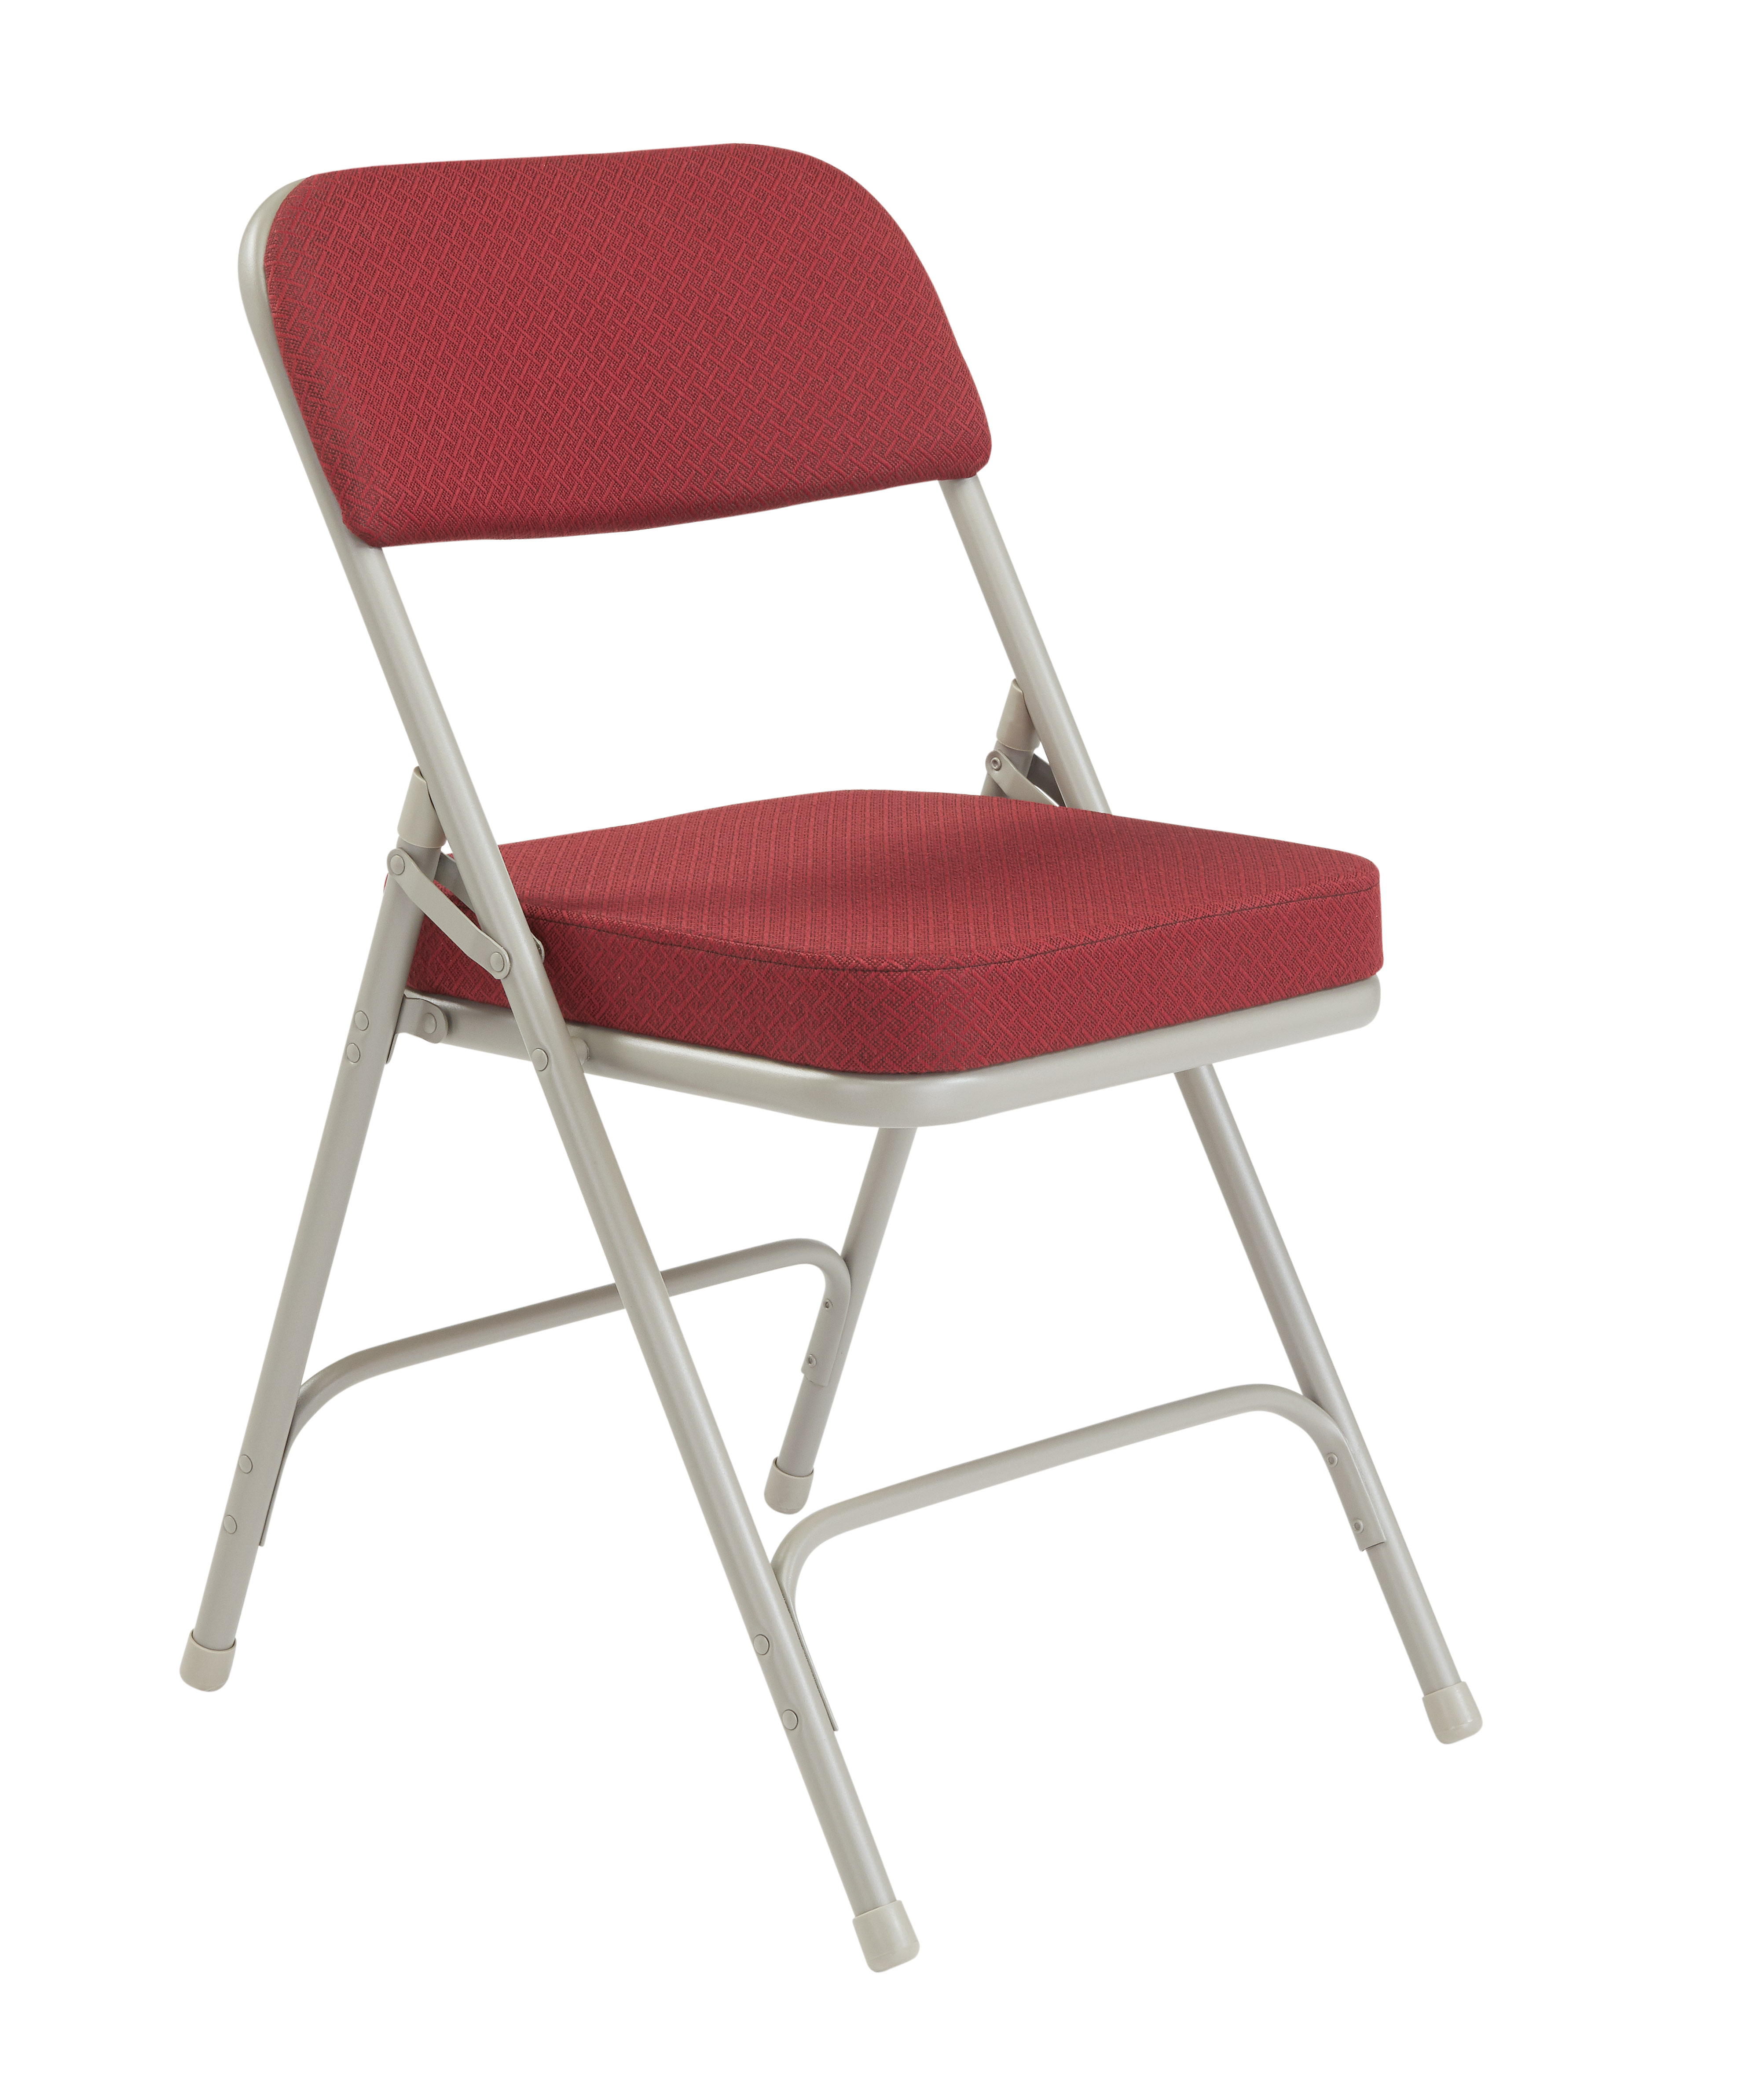 NPS 3218 Premium Burgundy Fabric Padded Folding Chair